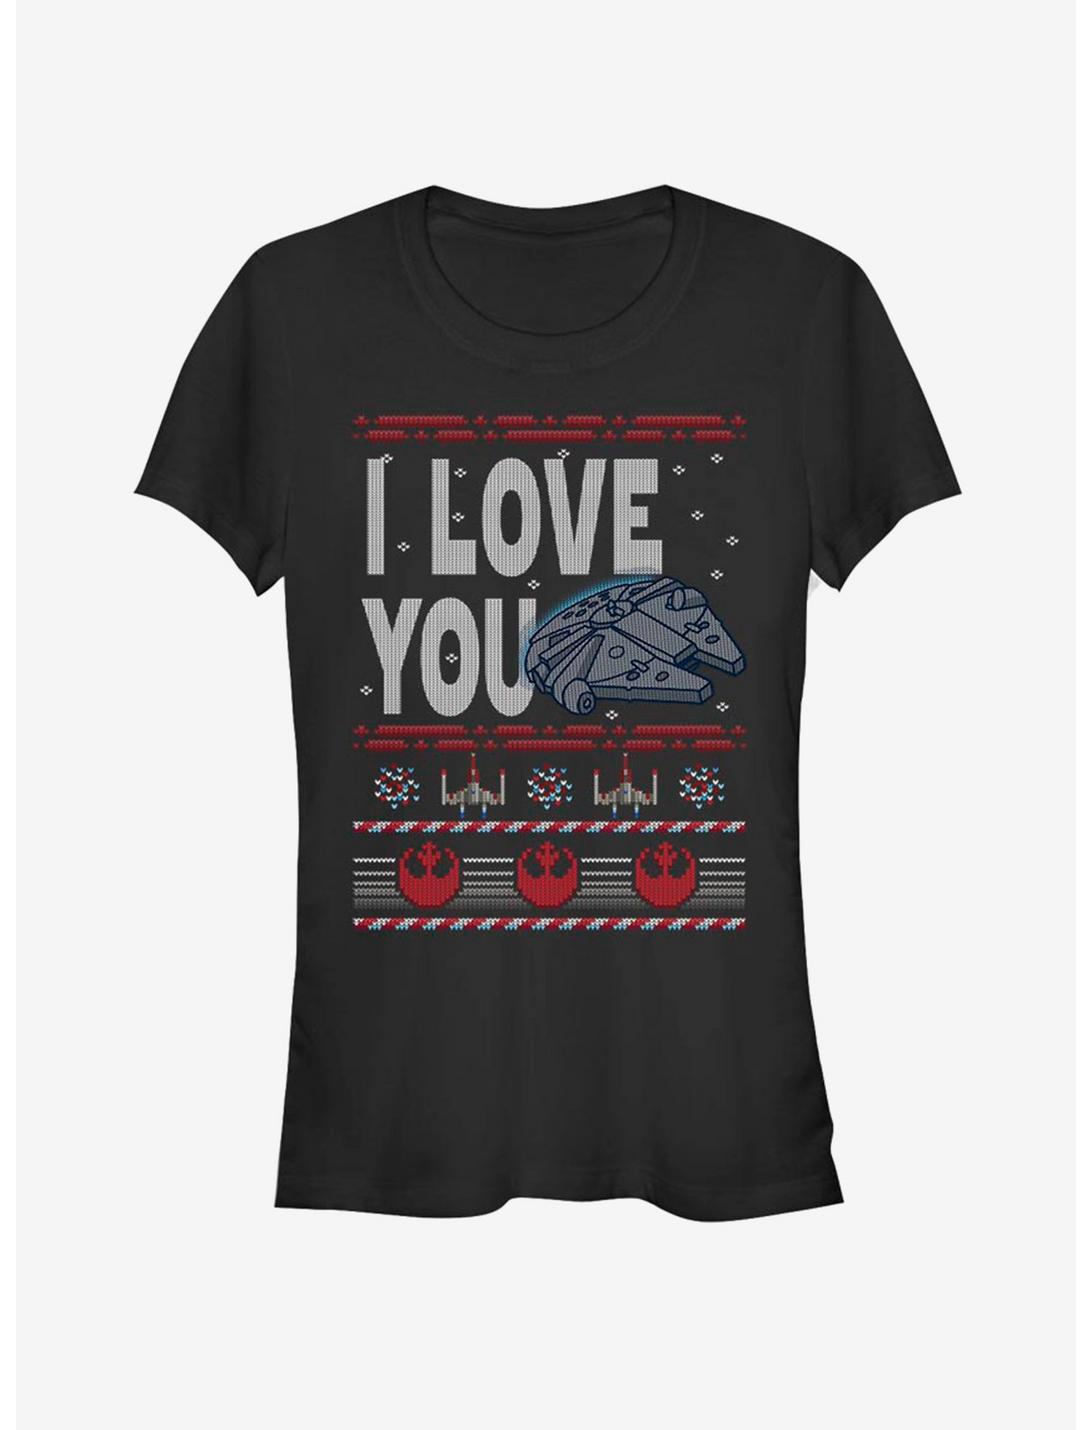 Star Wars Ugly Love Girls T-Shirt, BLACK, hi-res